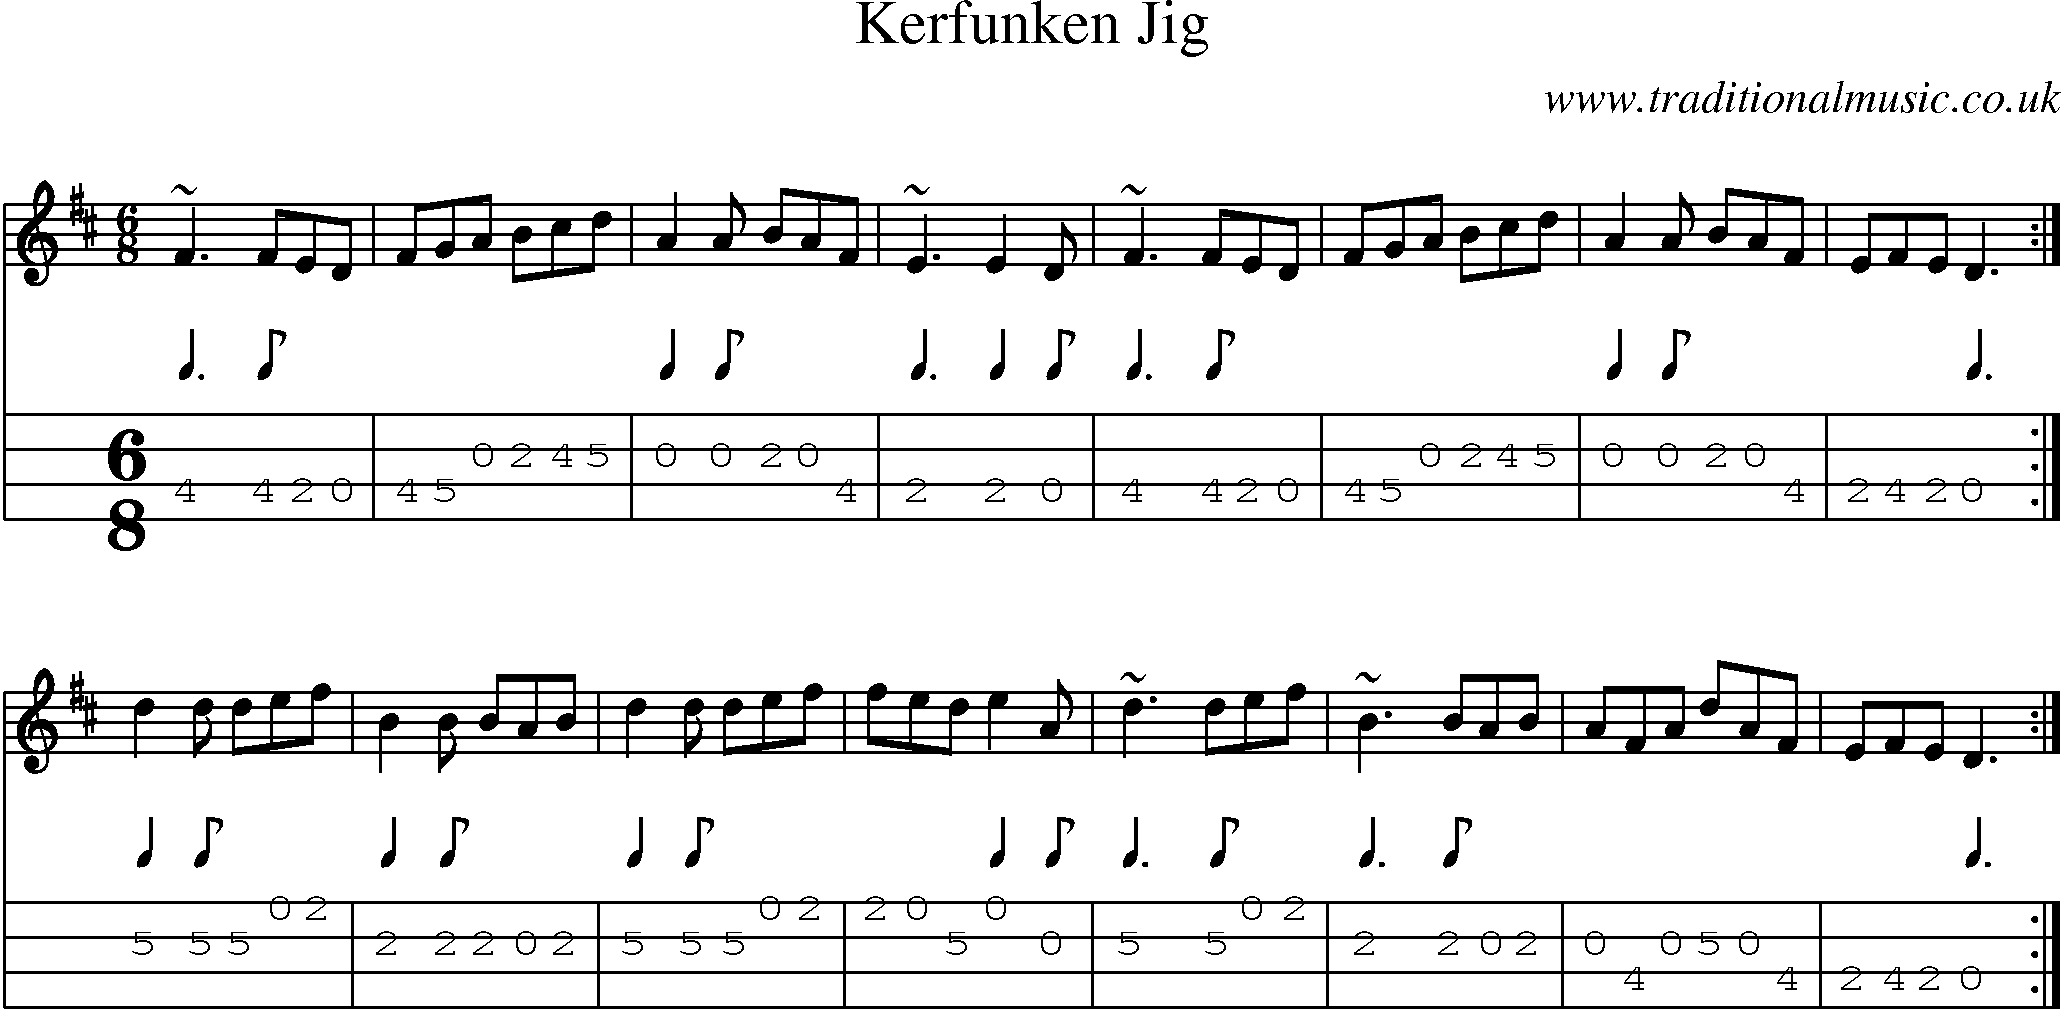 Music Score and Mandolin Tabs for Kerfunken Jig